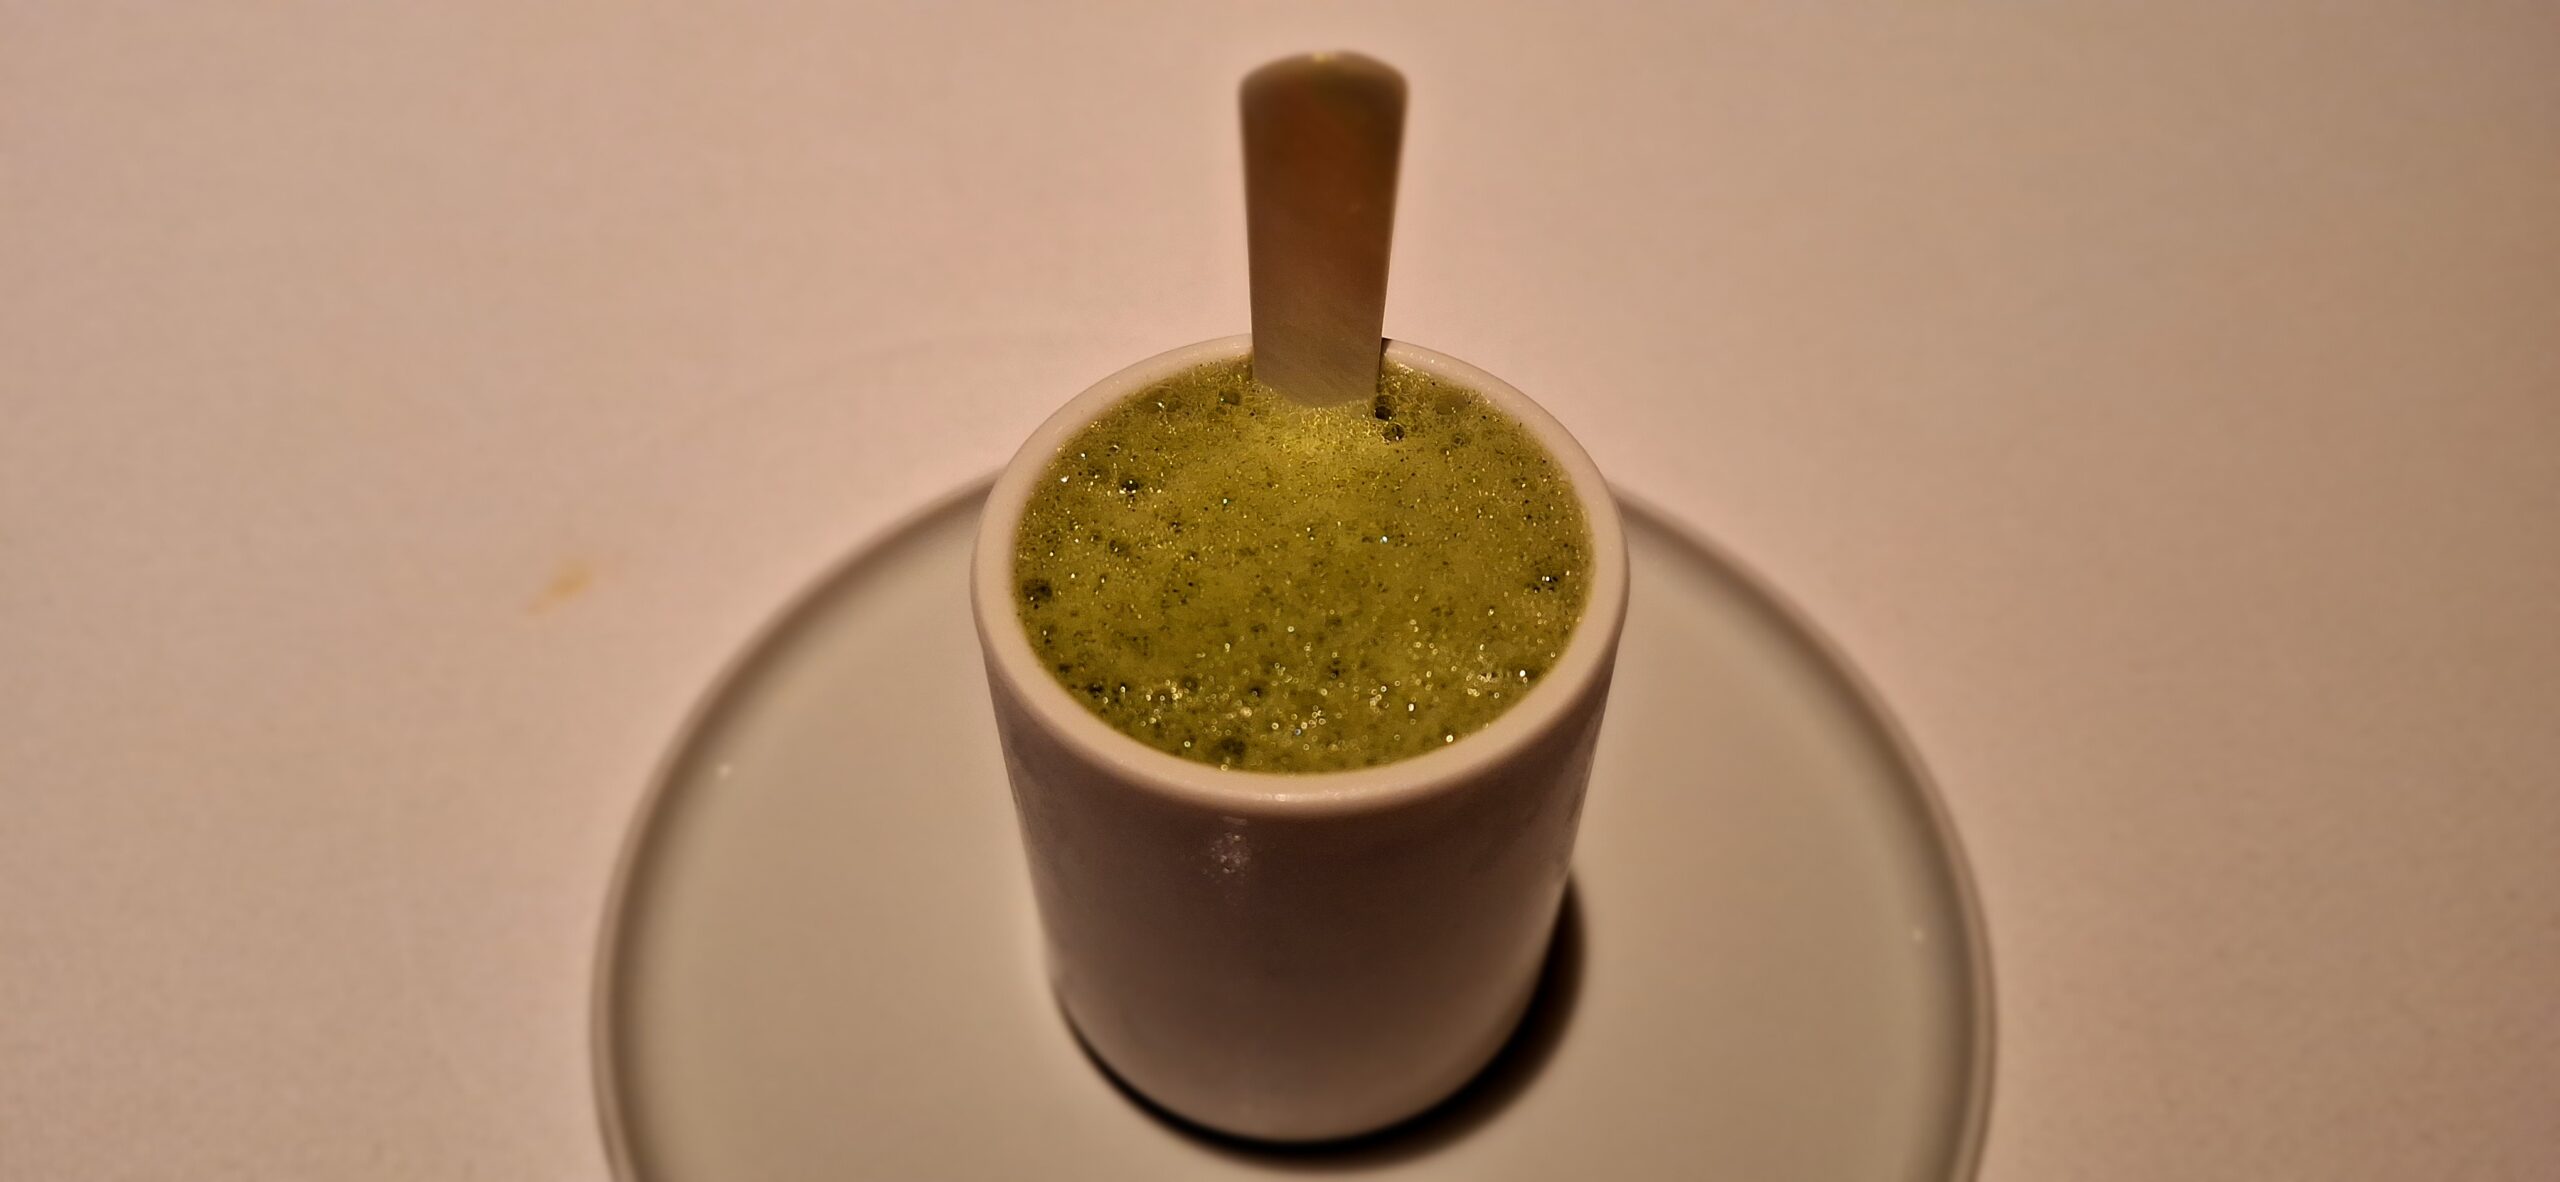 a green liquid in a cup